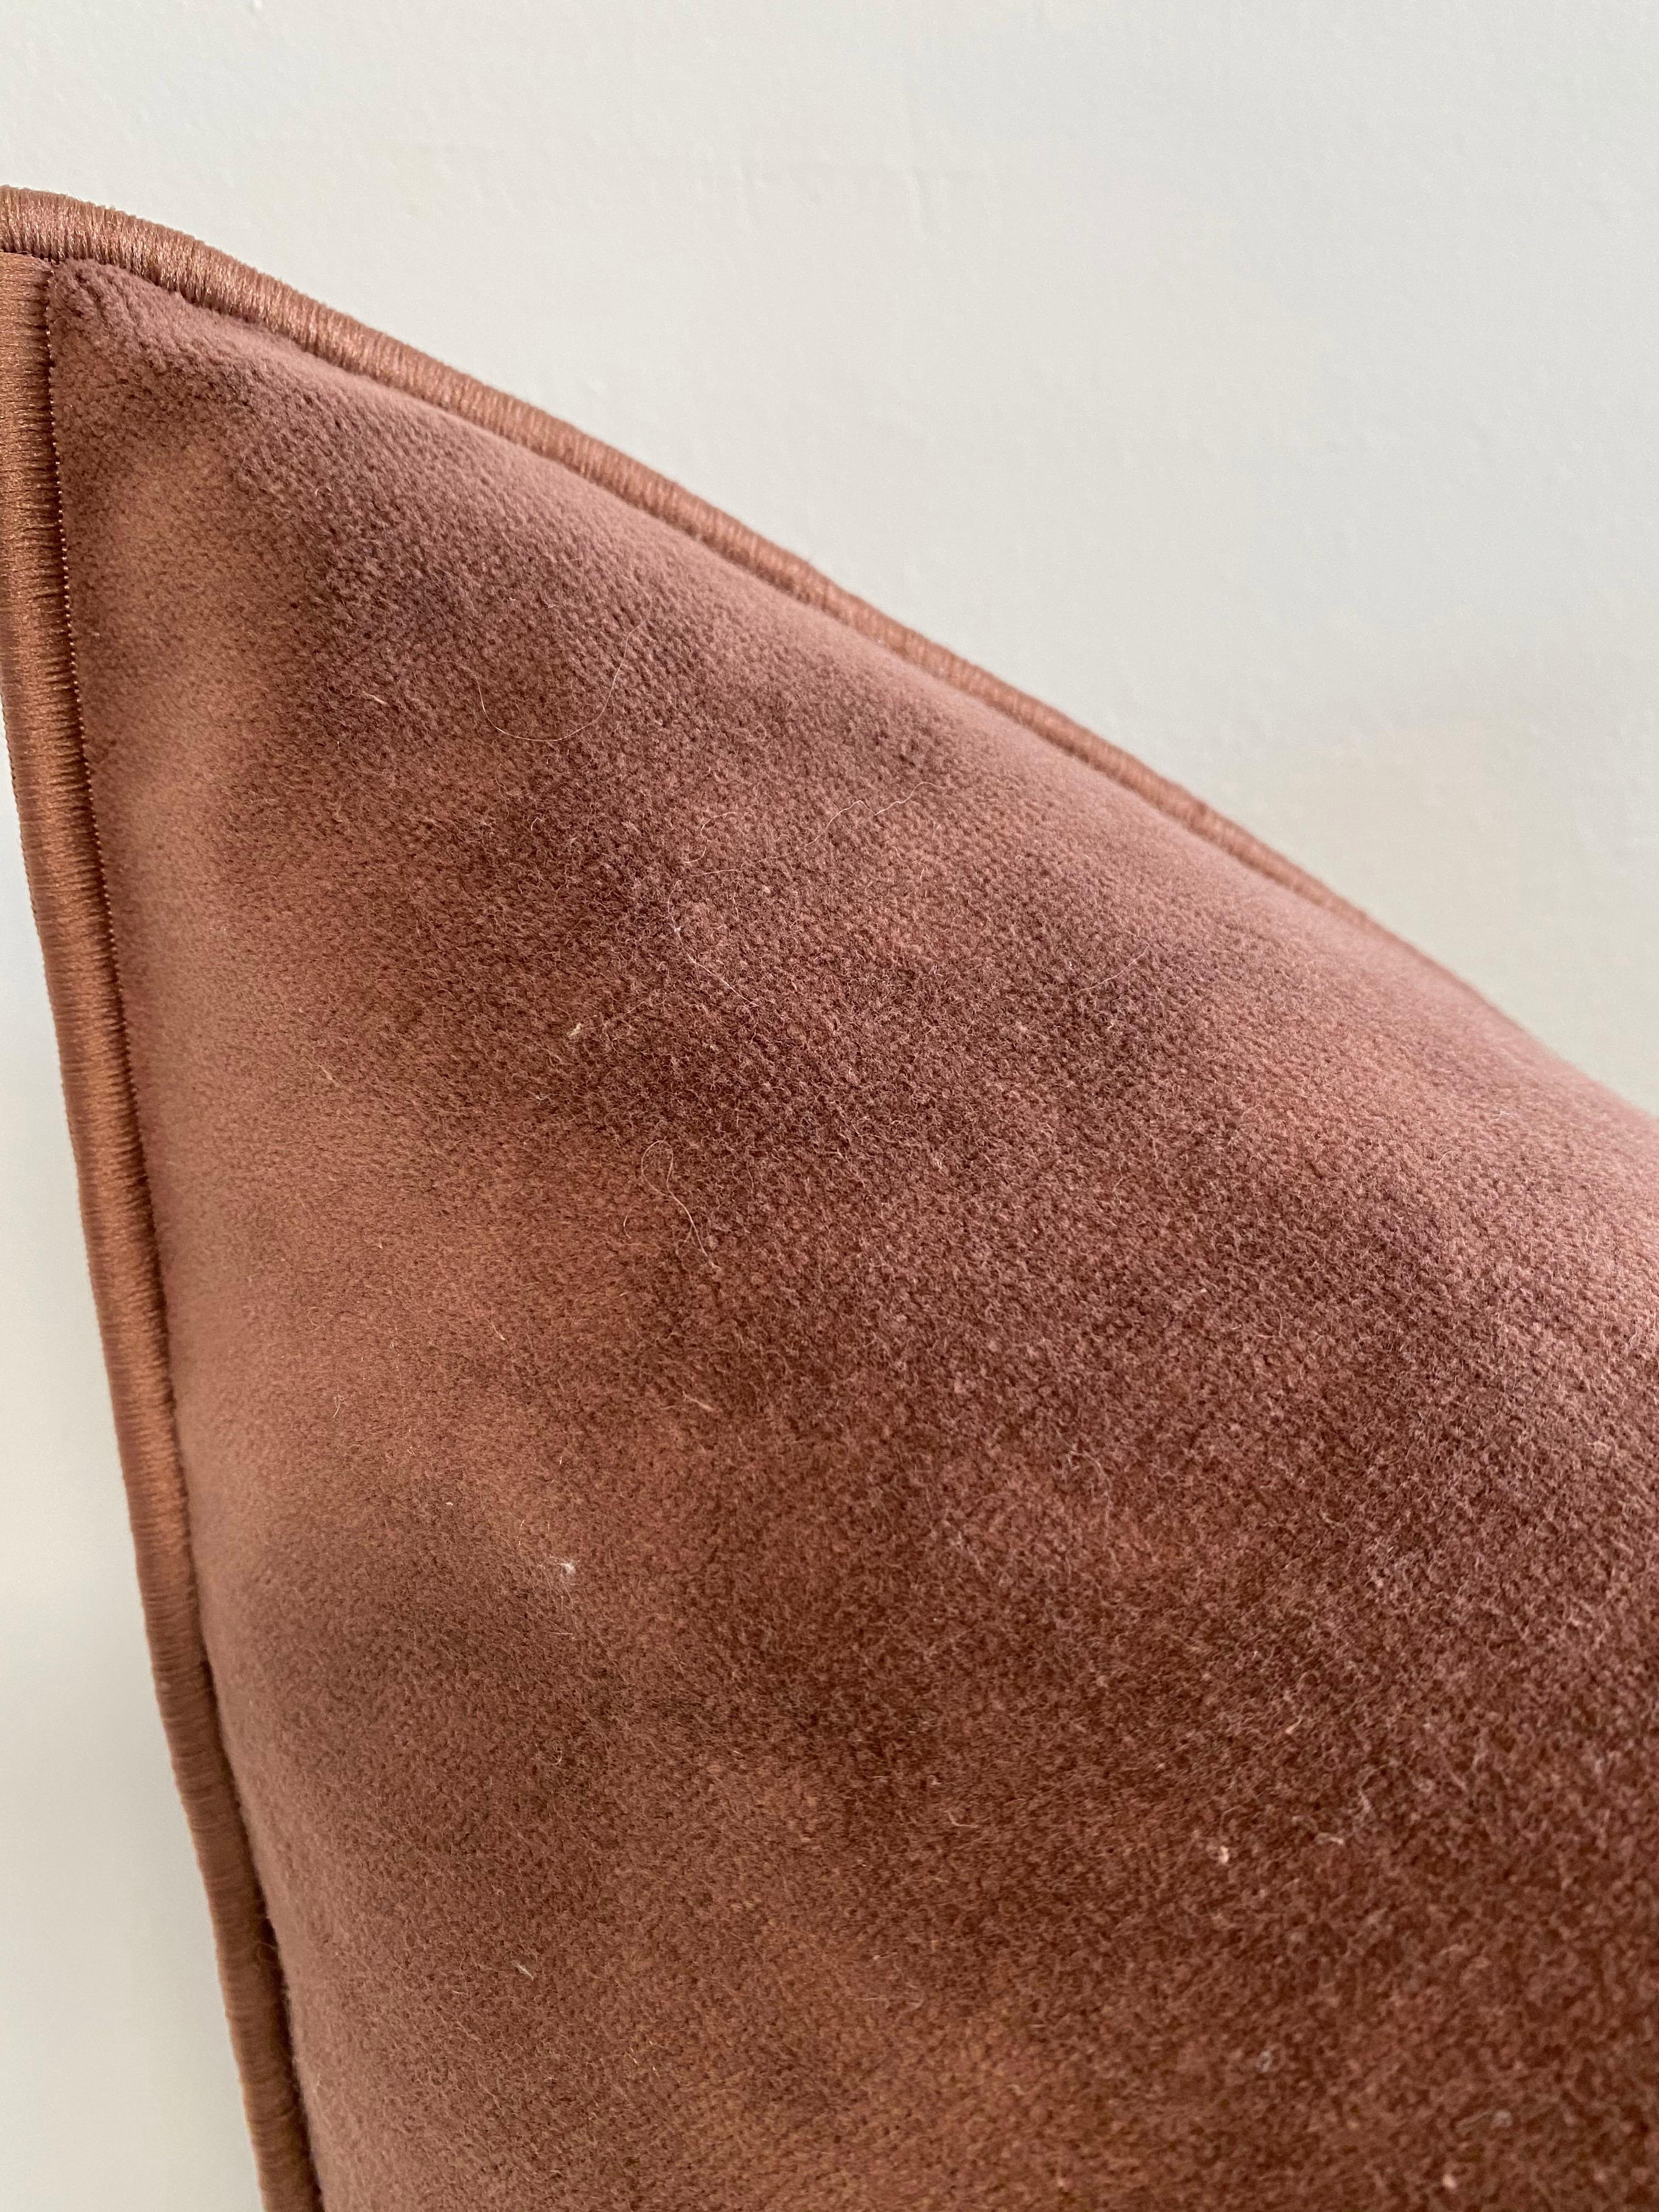 European vintage velvet accent pillow with down feather insert
Color: Argile vintage velvet (Dark Rust Blush Tone)
Size 20